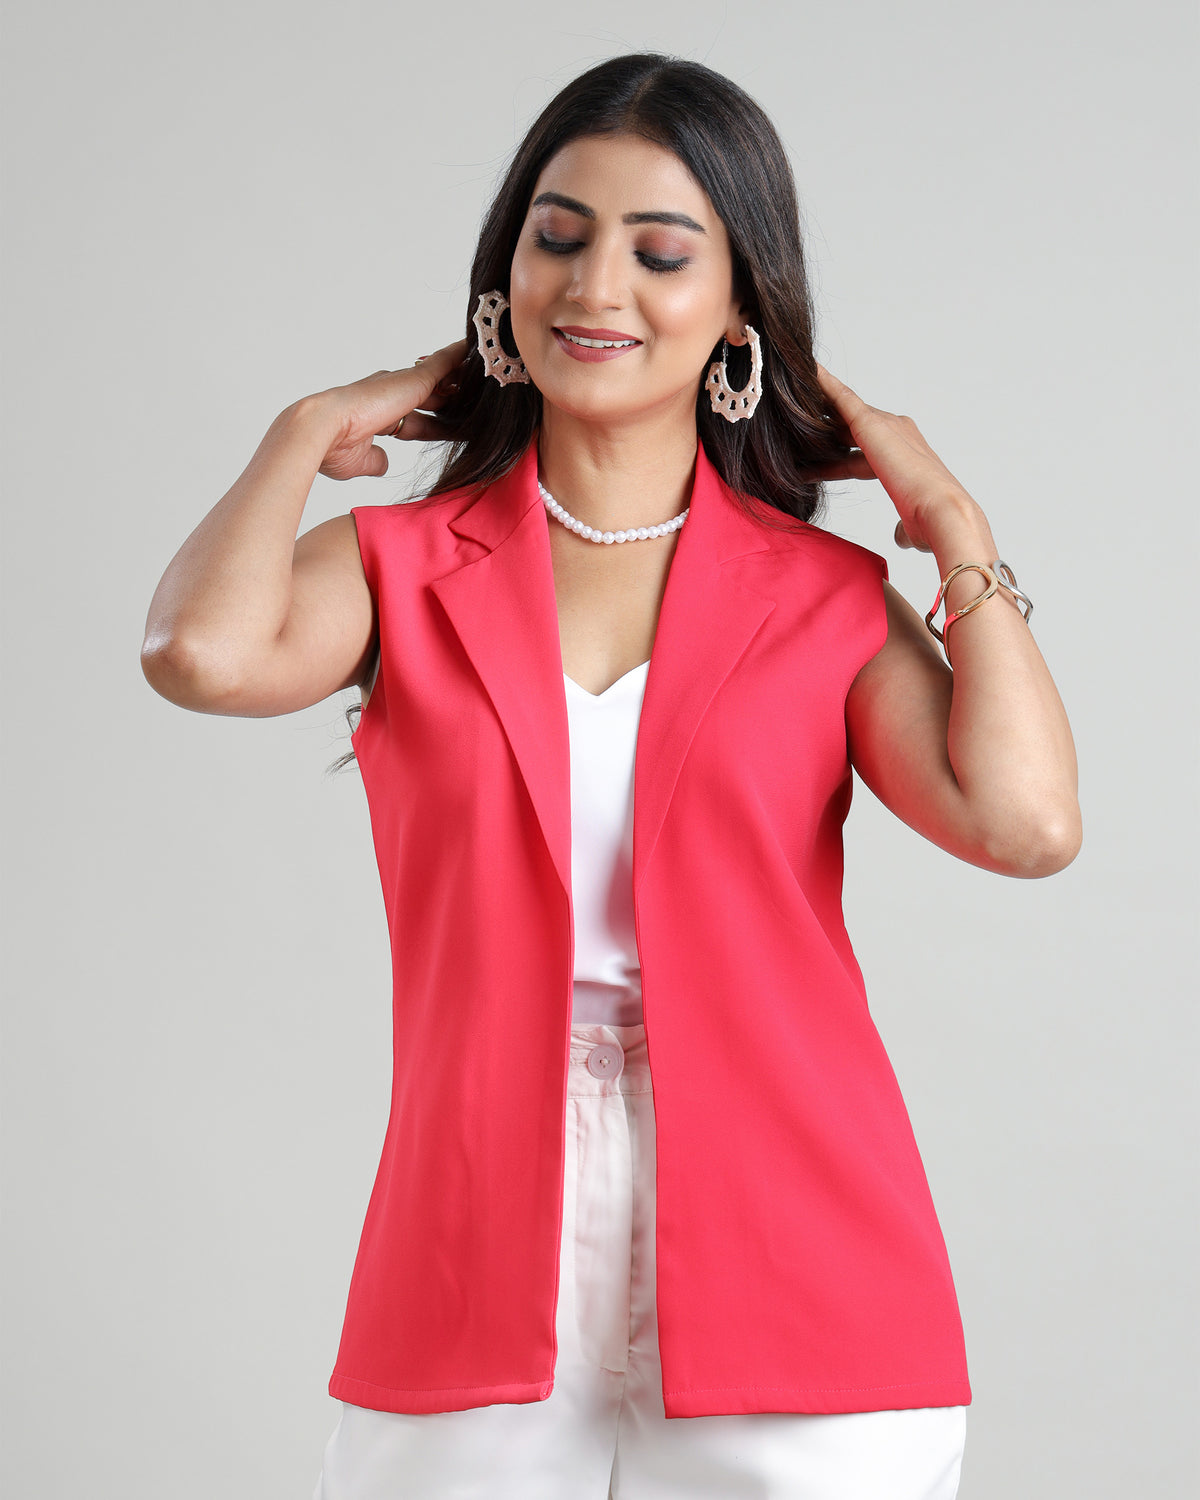 Layer Up in Luxury: Women's Pink Sleeveless Jacket